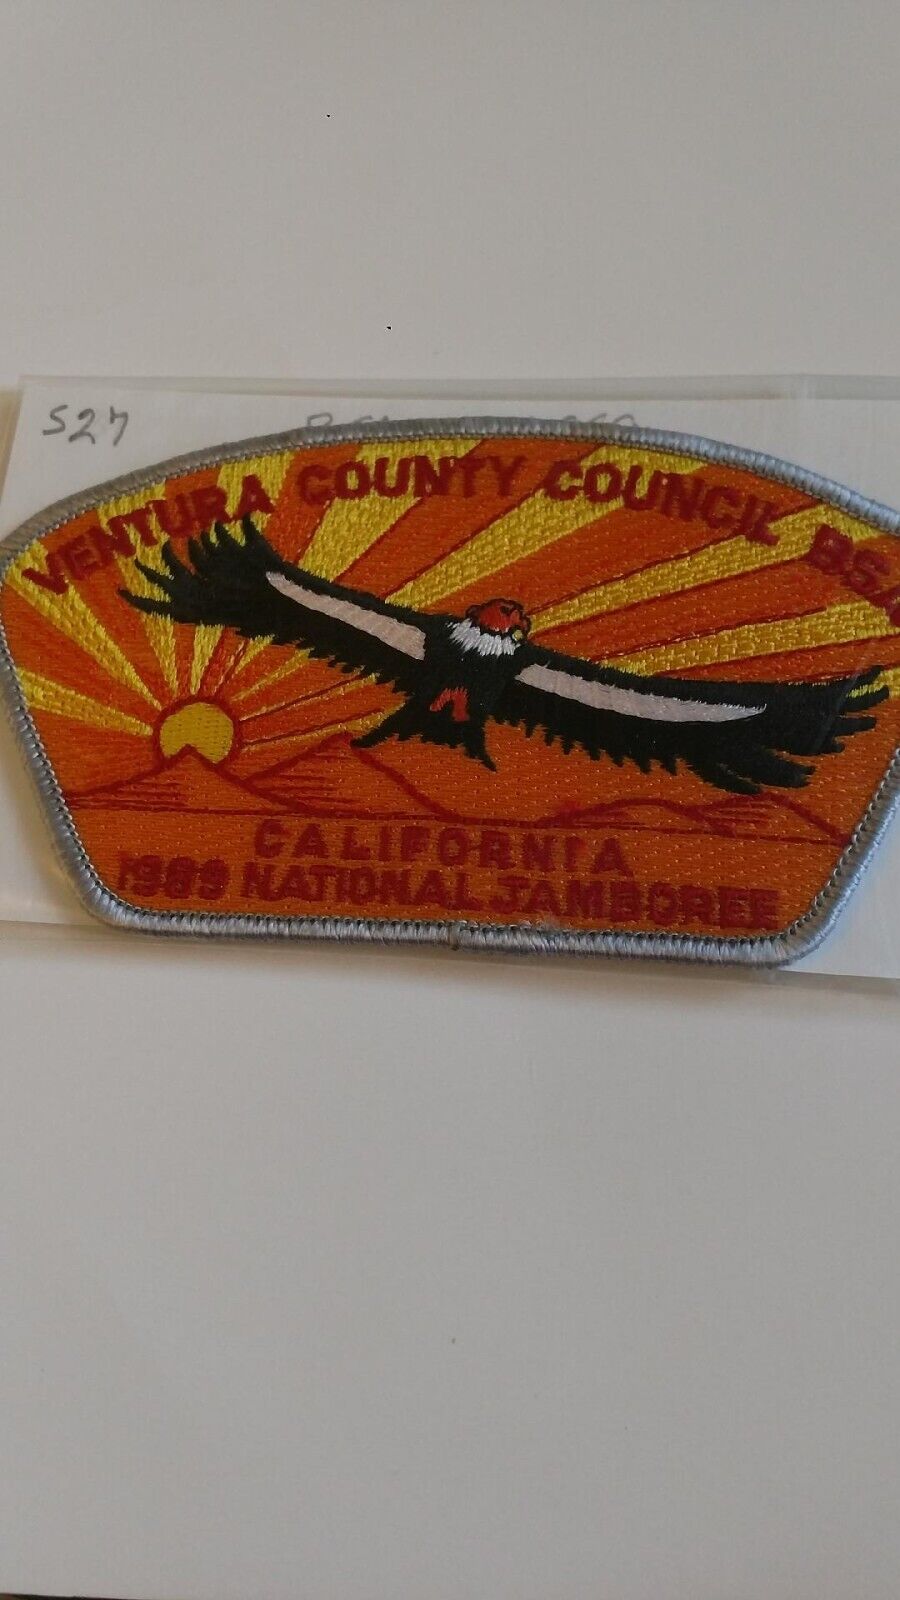 BSA, Ventura County Council, CSP, S-27, 1989 National Jamboree